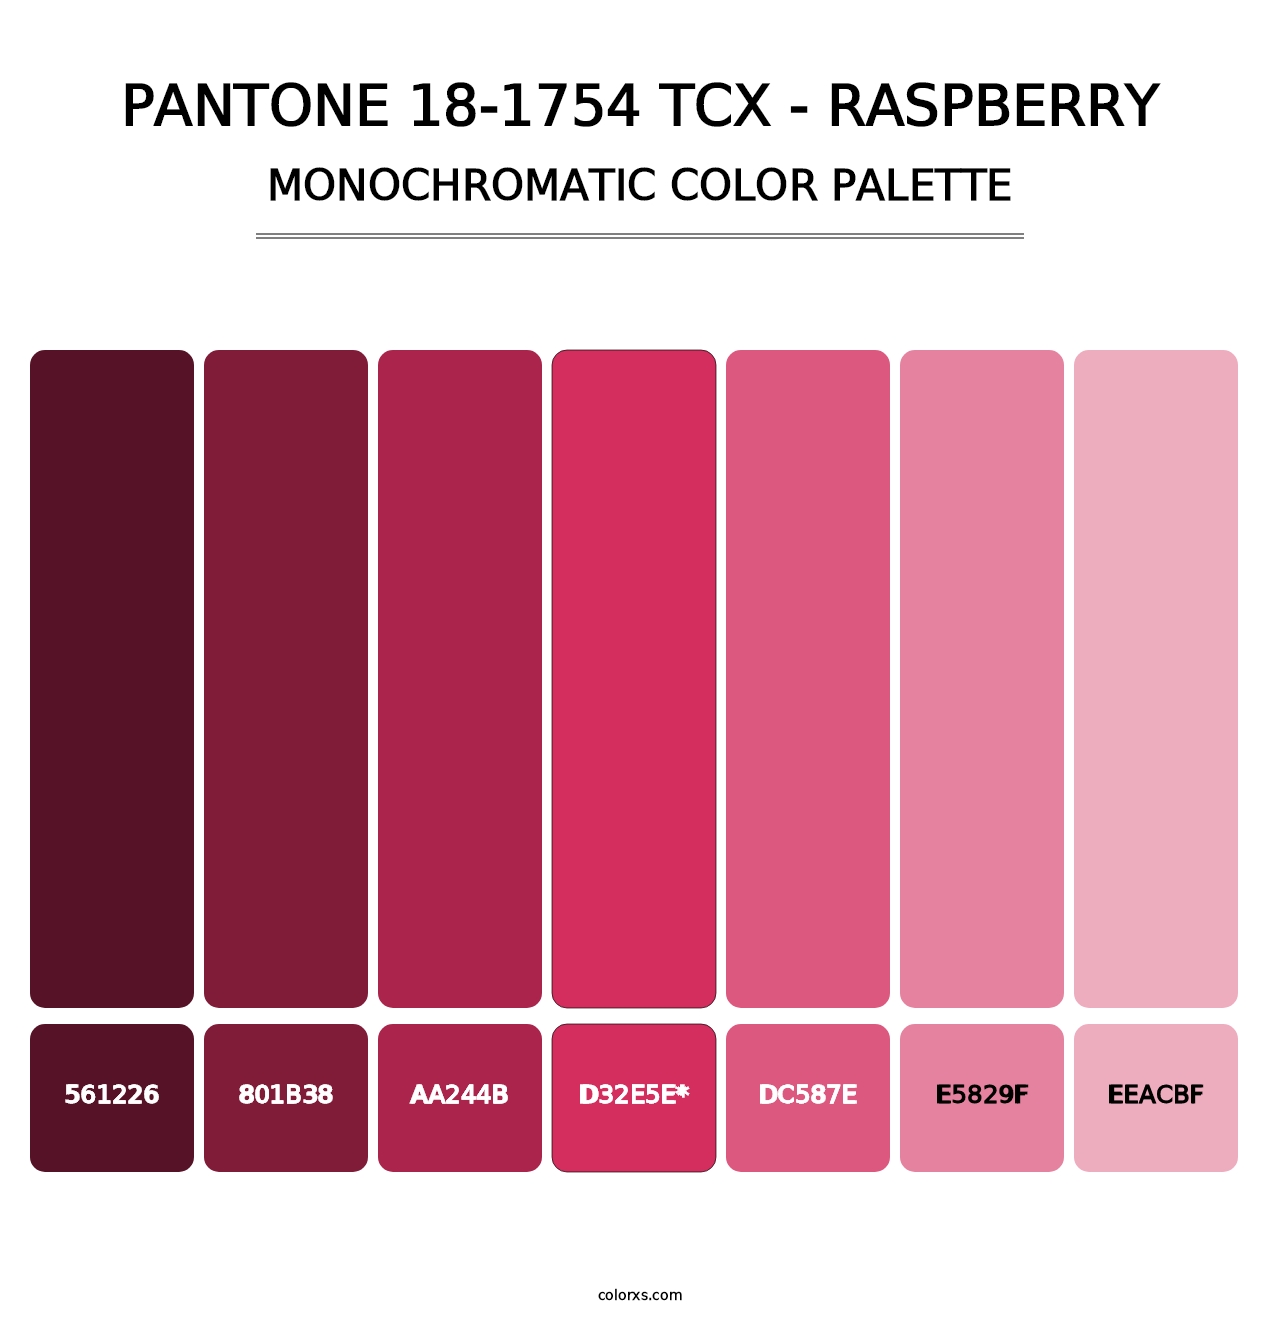 PANTONE 18-1754 TCX - Raspberry - Monochromatic Color Palette